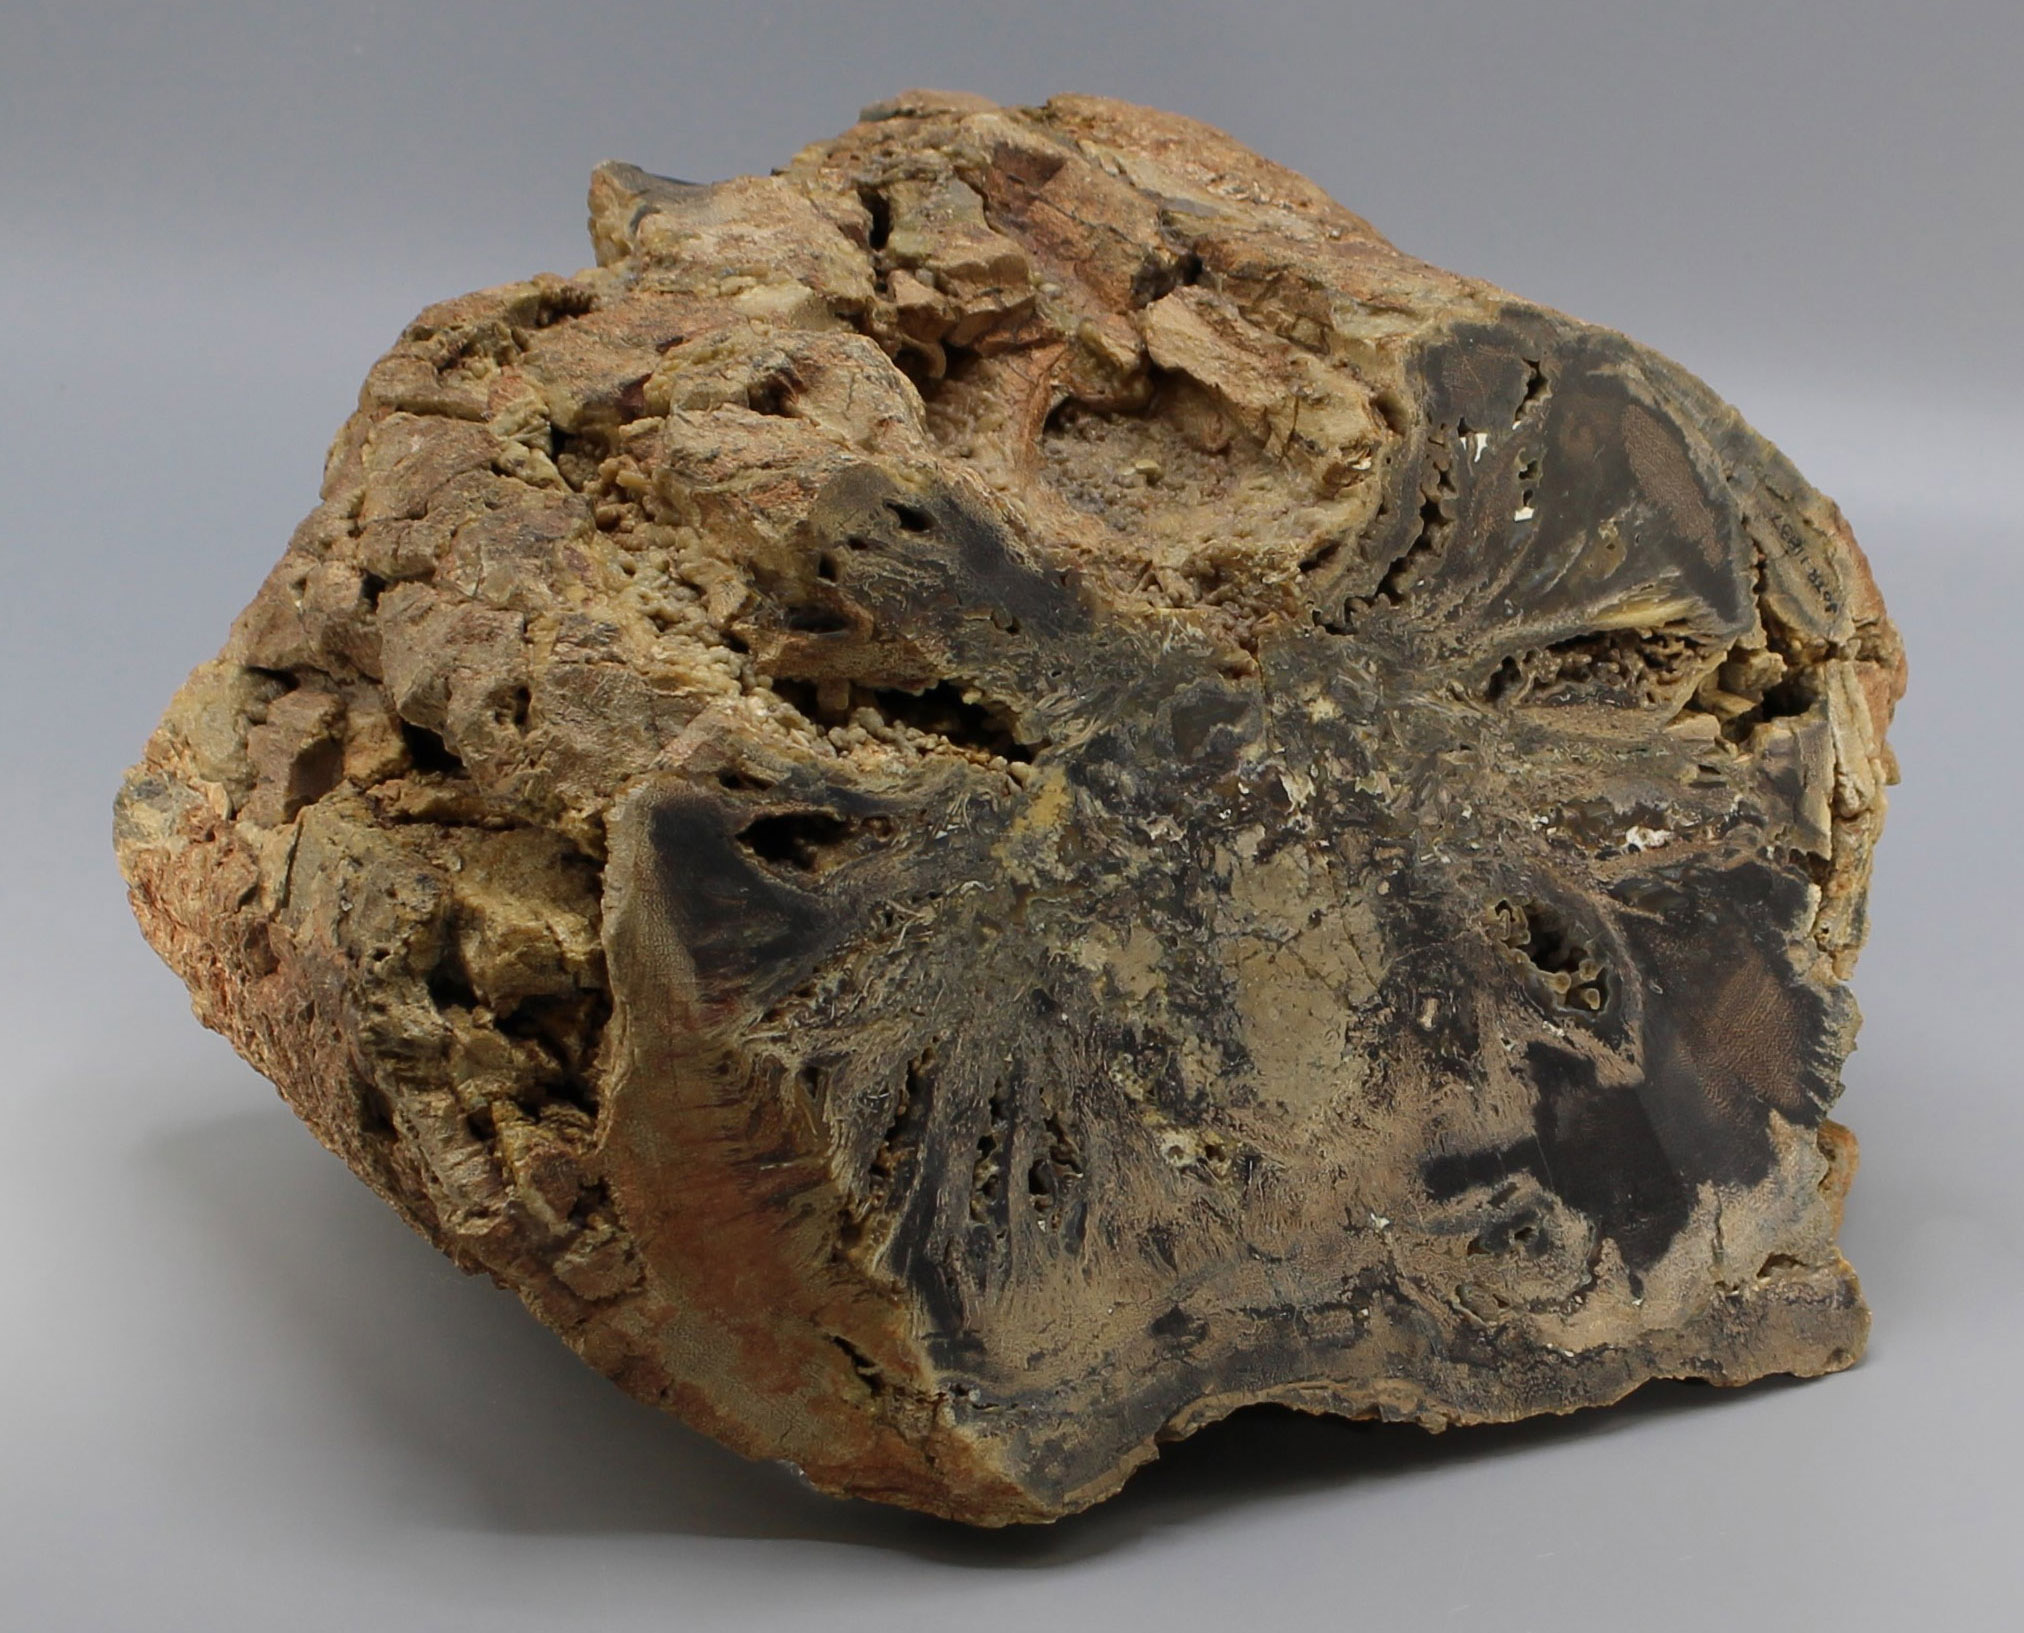 Fossilized Protoyucca trunk